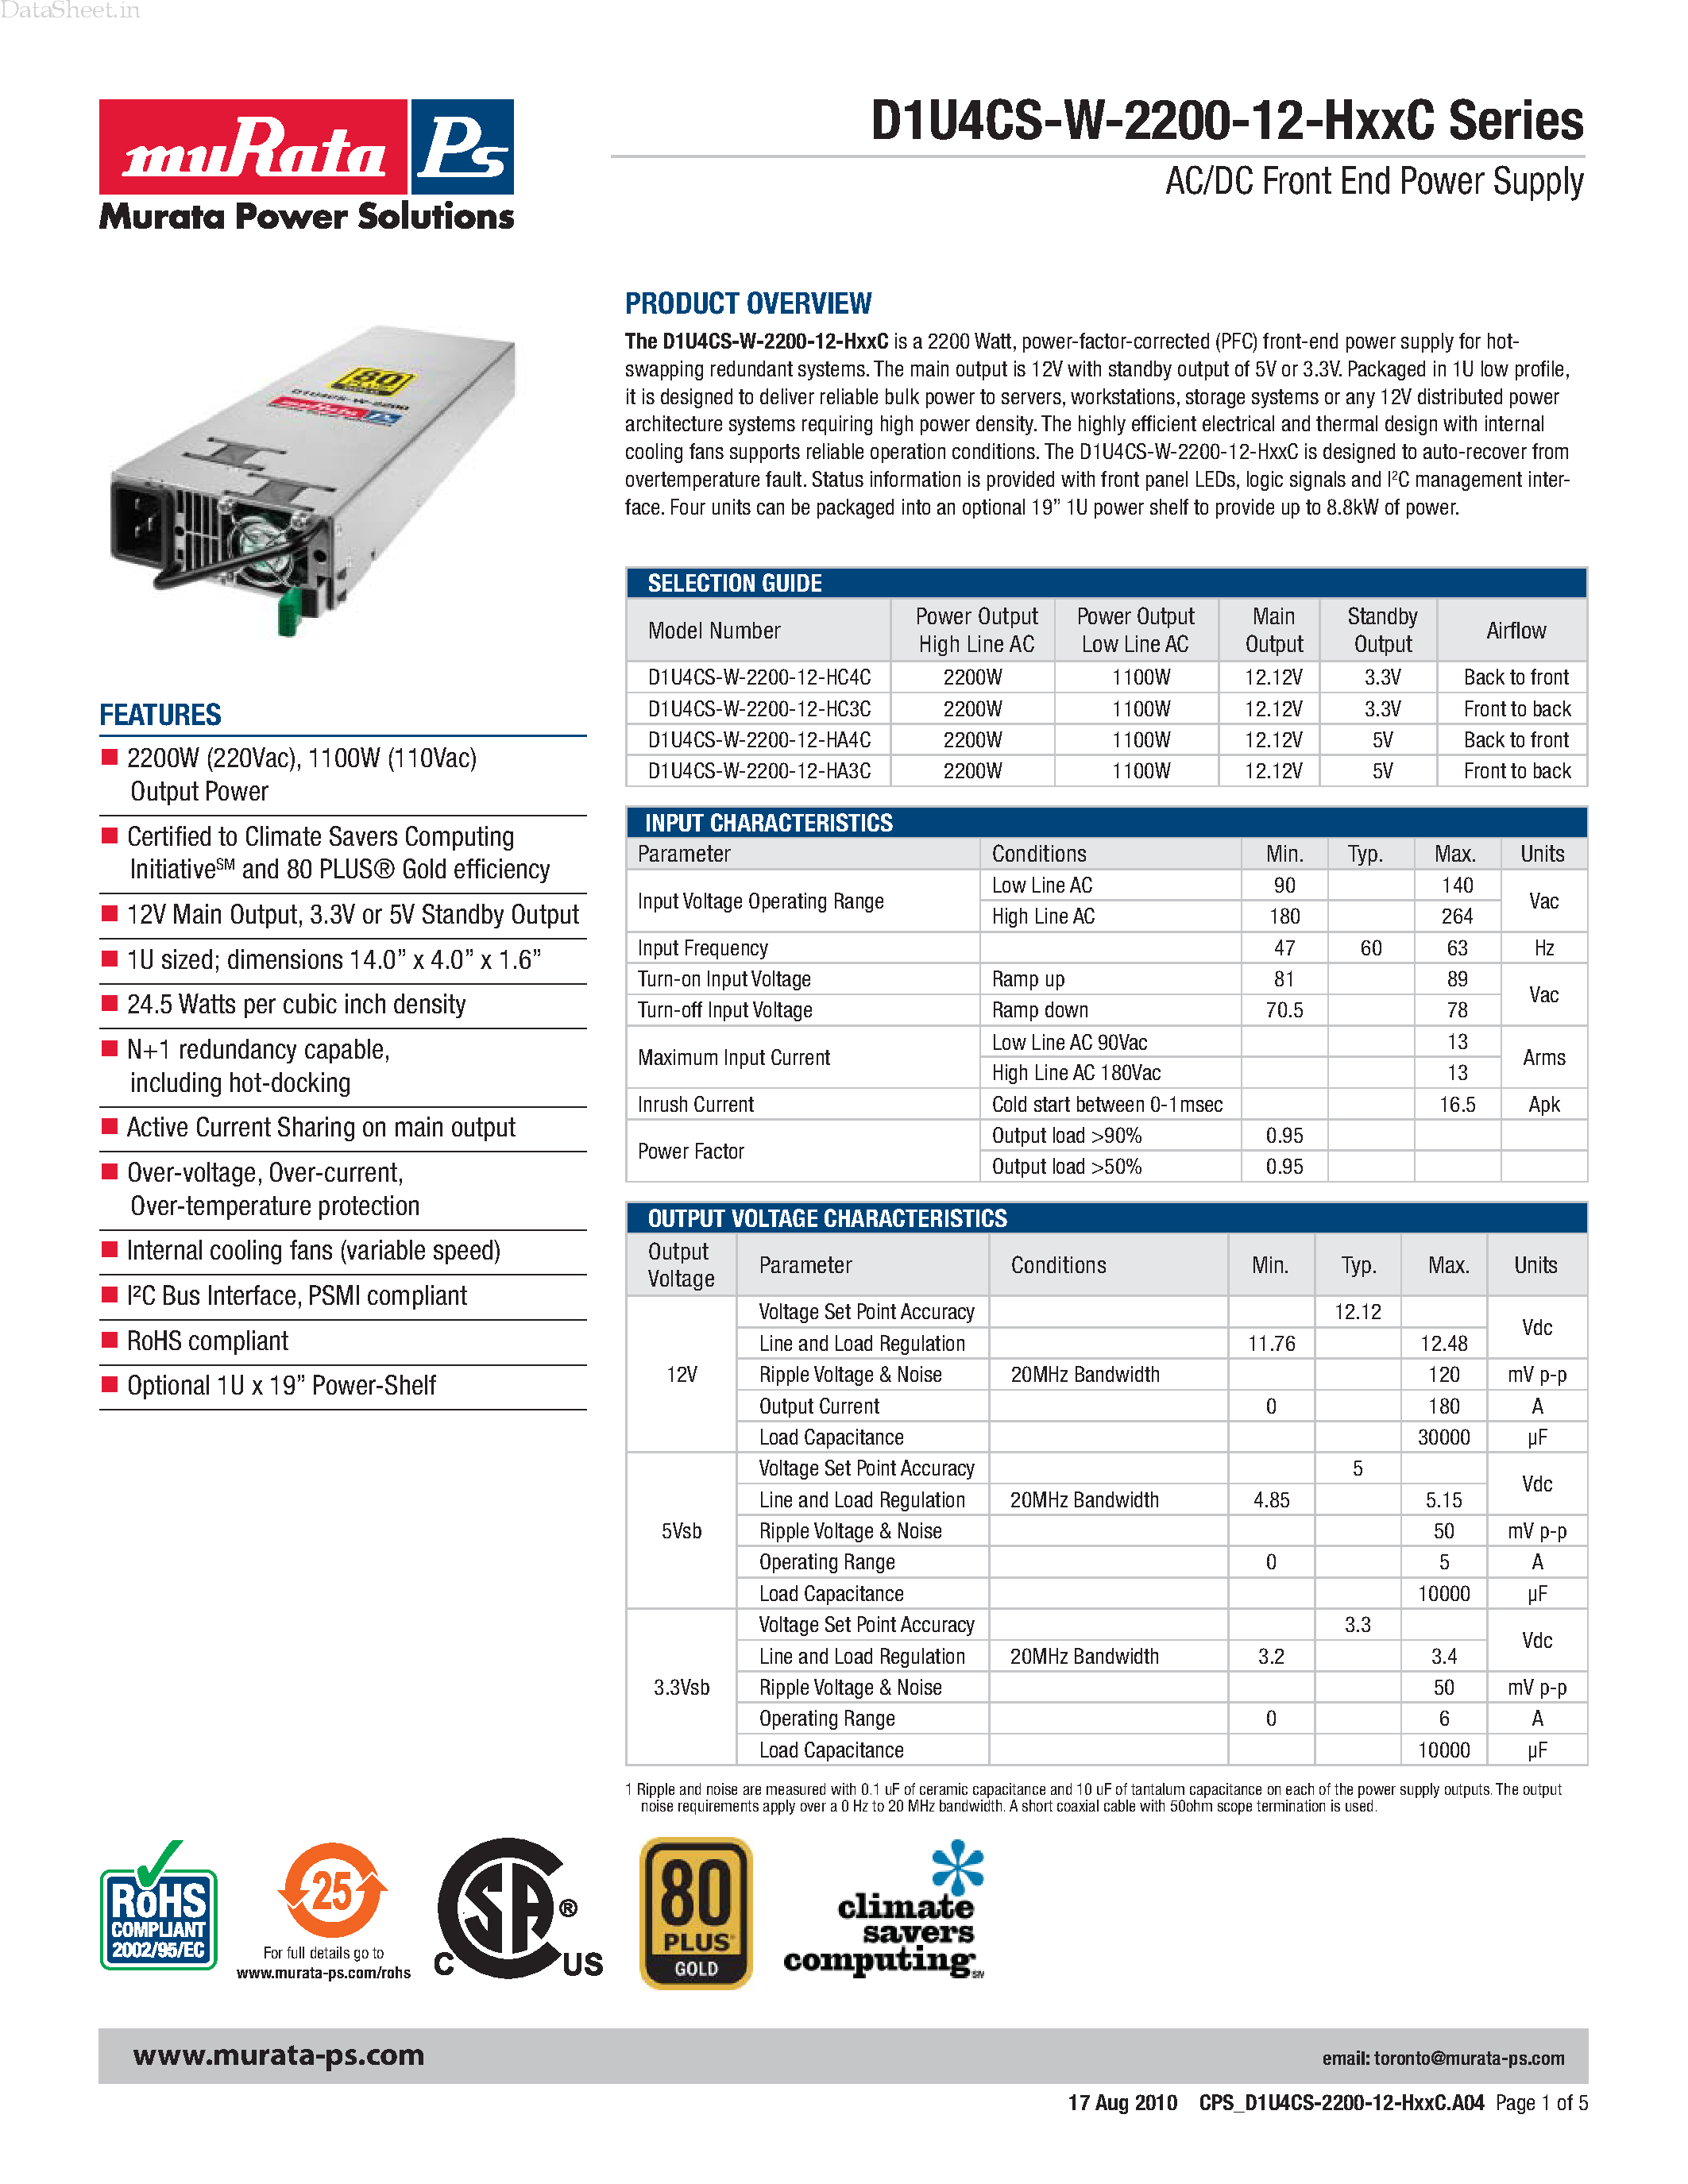 Даташит D1U4CS-W-2200-12-HXXC - AC/DC Front End Power Supply страница 1